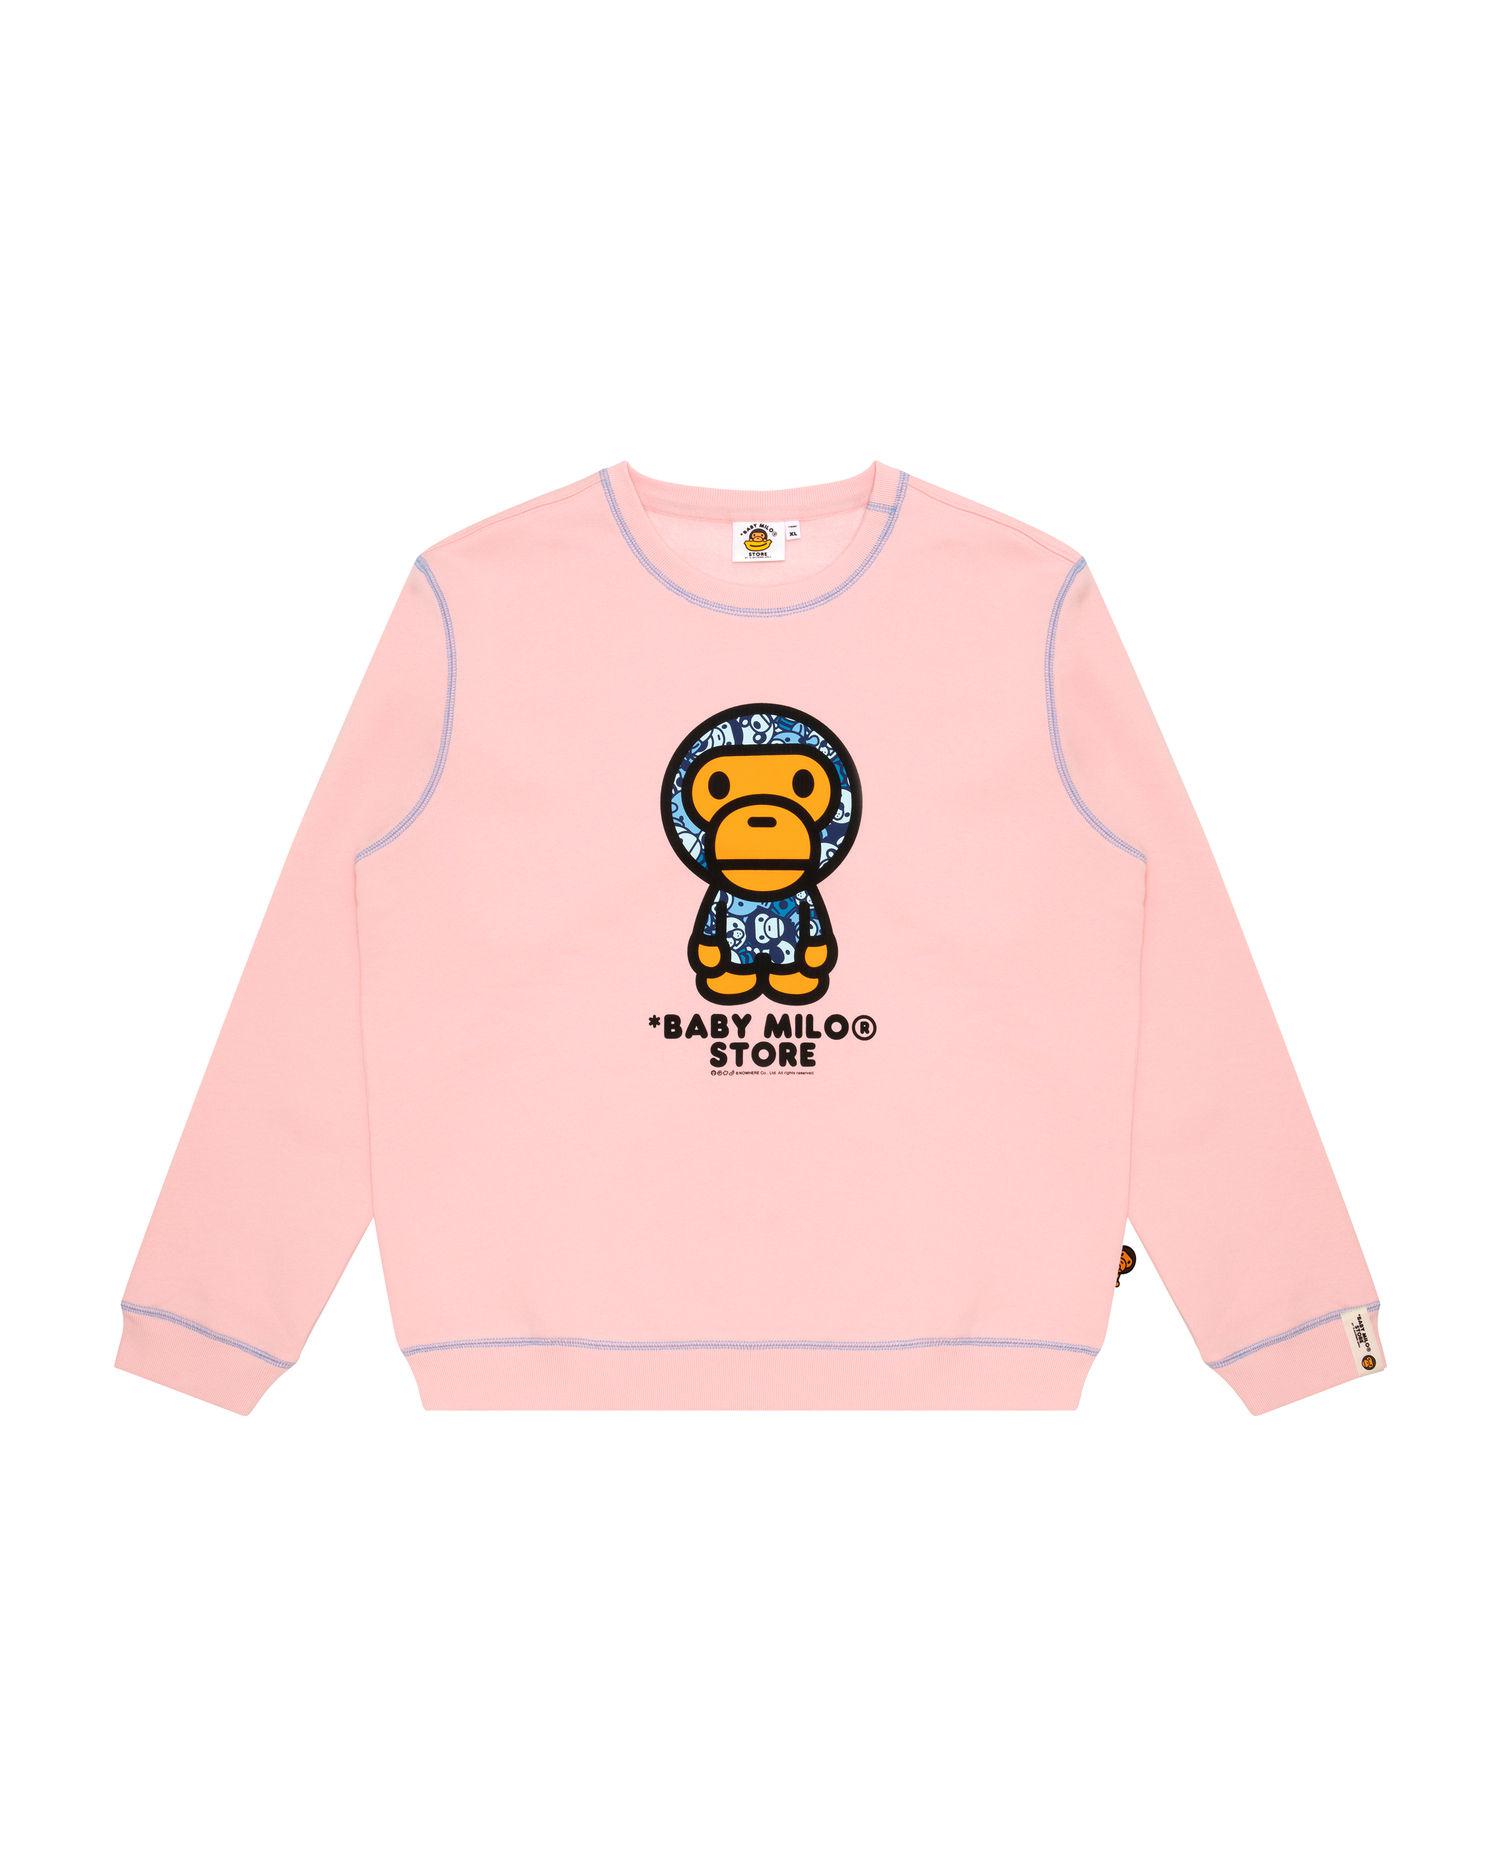 Baby Milo crew neck sweatshirt by *BABY MILO(R) STORE